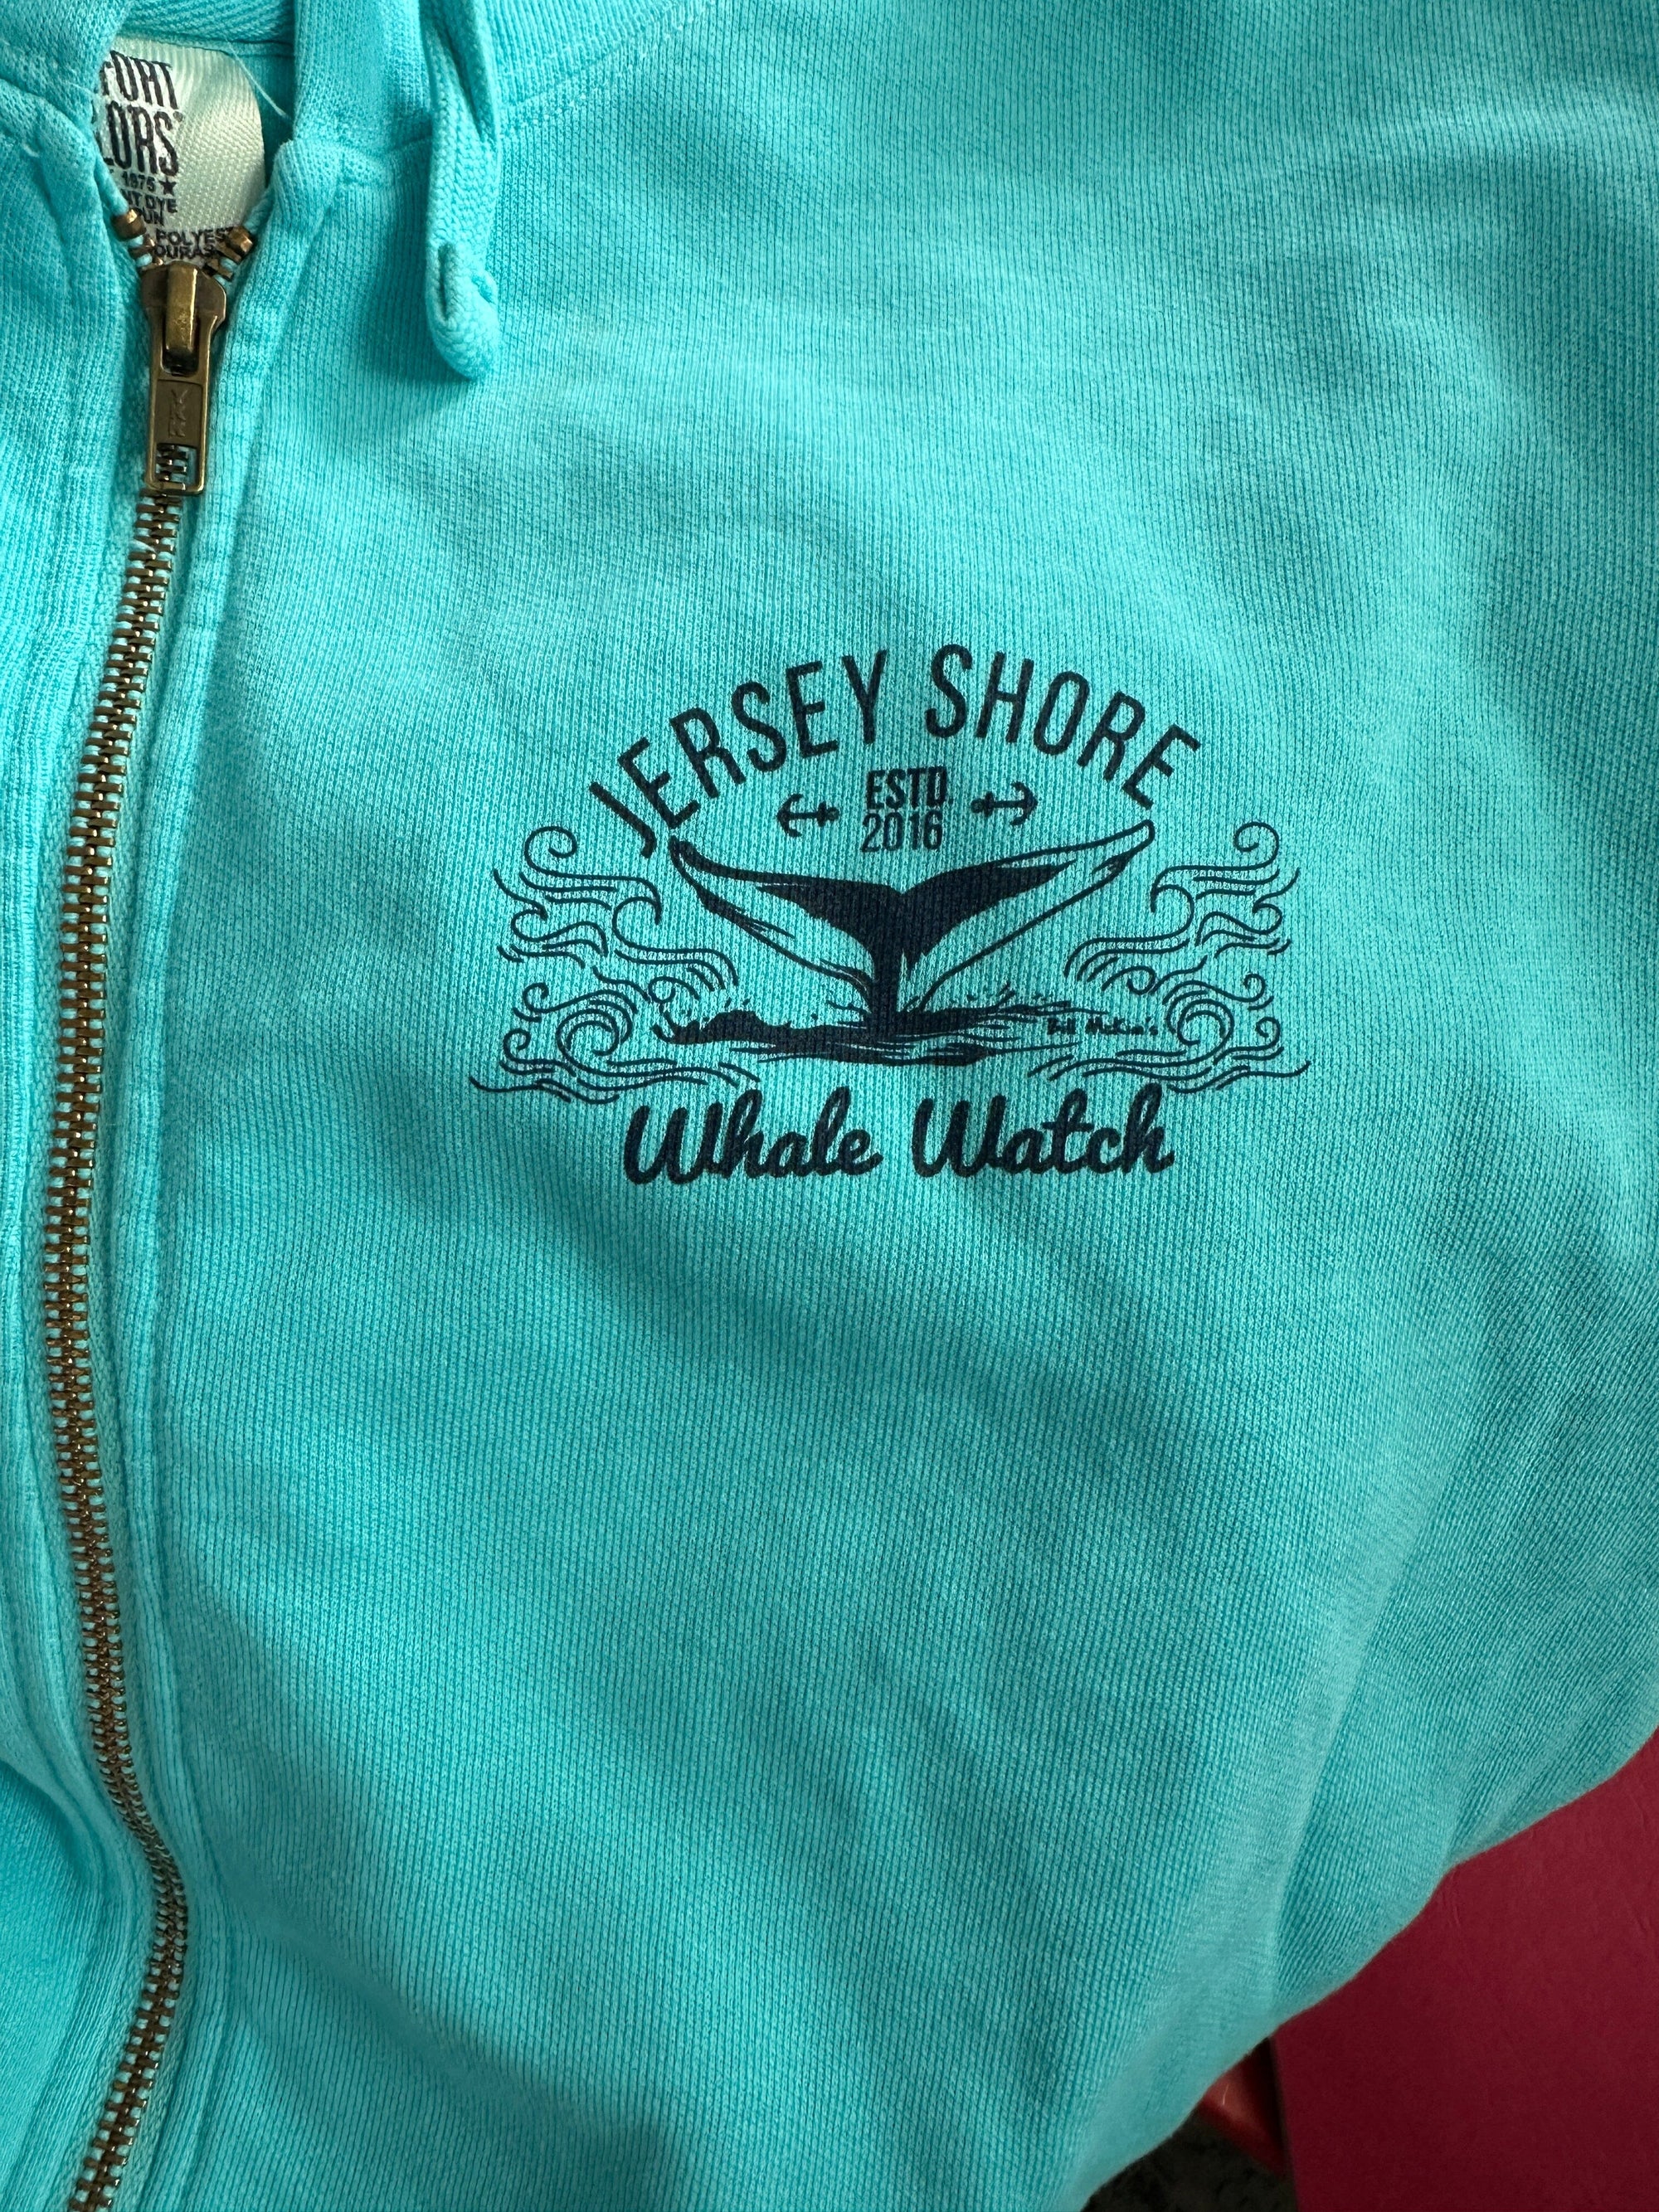 Est. 2016 Design Jersey Shore Whale Watch Sweatshirt printed both sides Bill McKim Photography Ladies 2XL Seafoam 